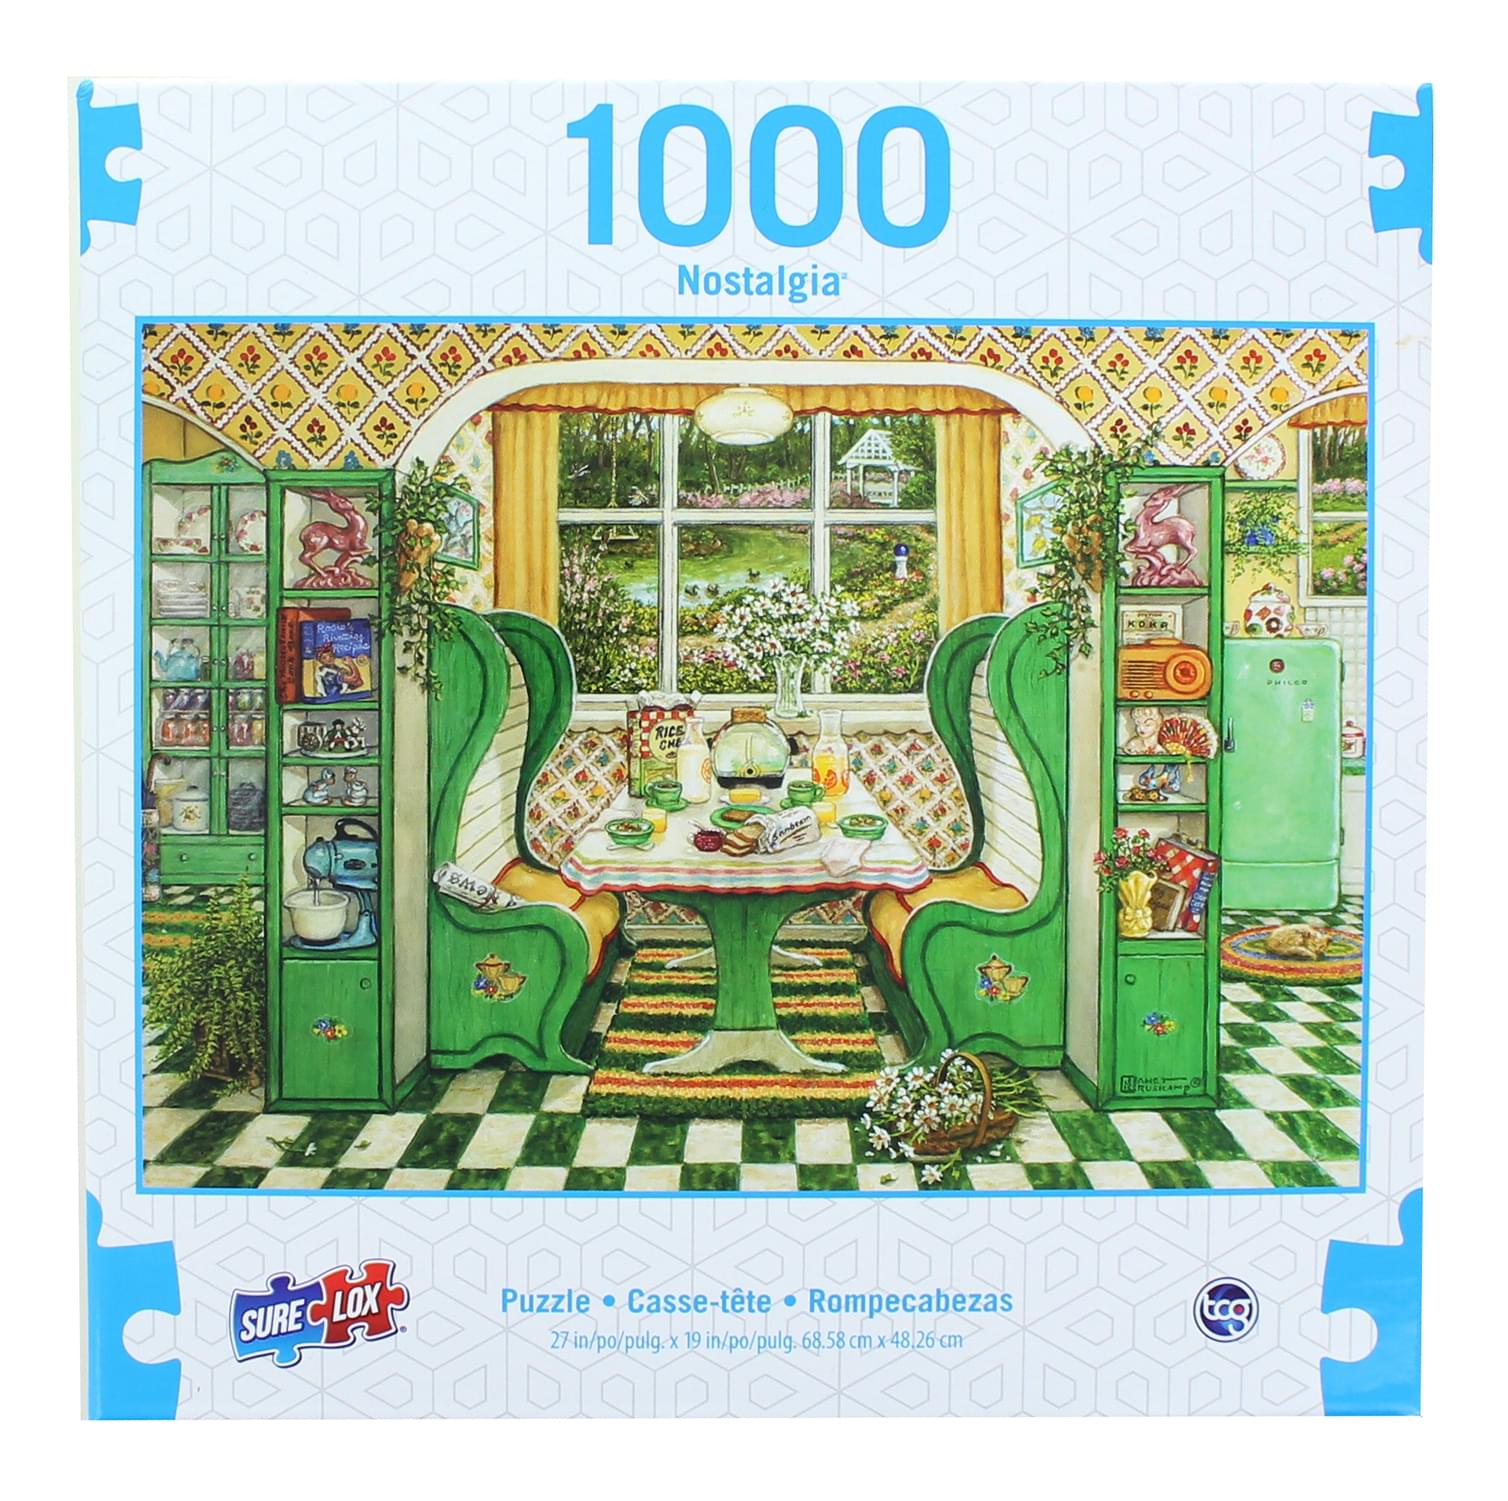 Nostalgia 1000 Piece Jigsaw Puzzle | 1940s Breakfast Nook